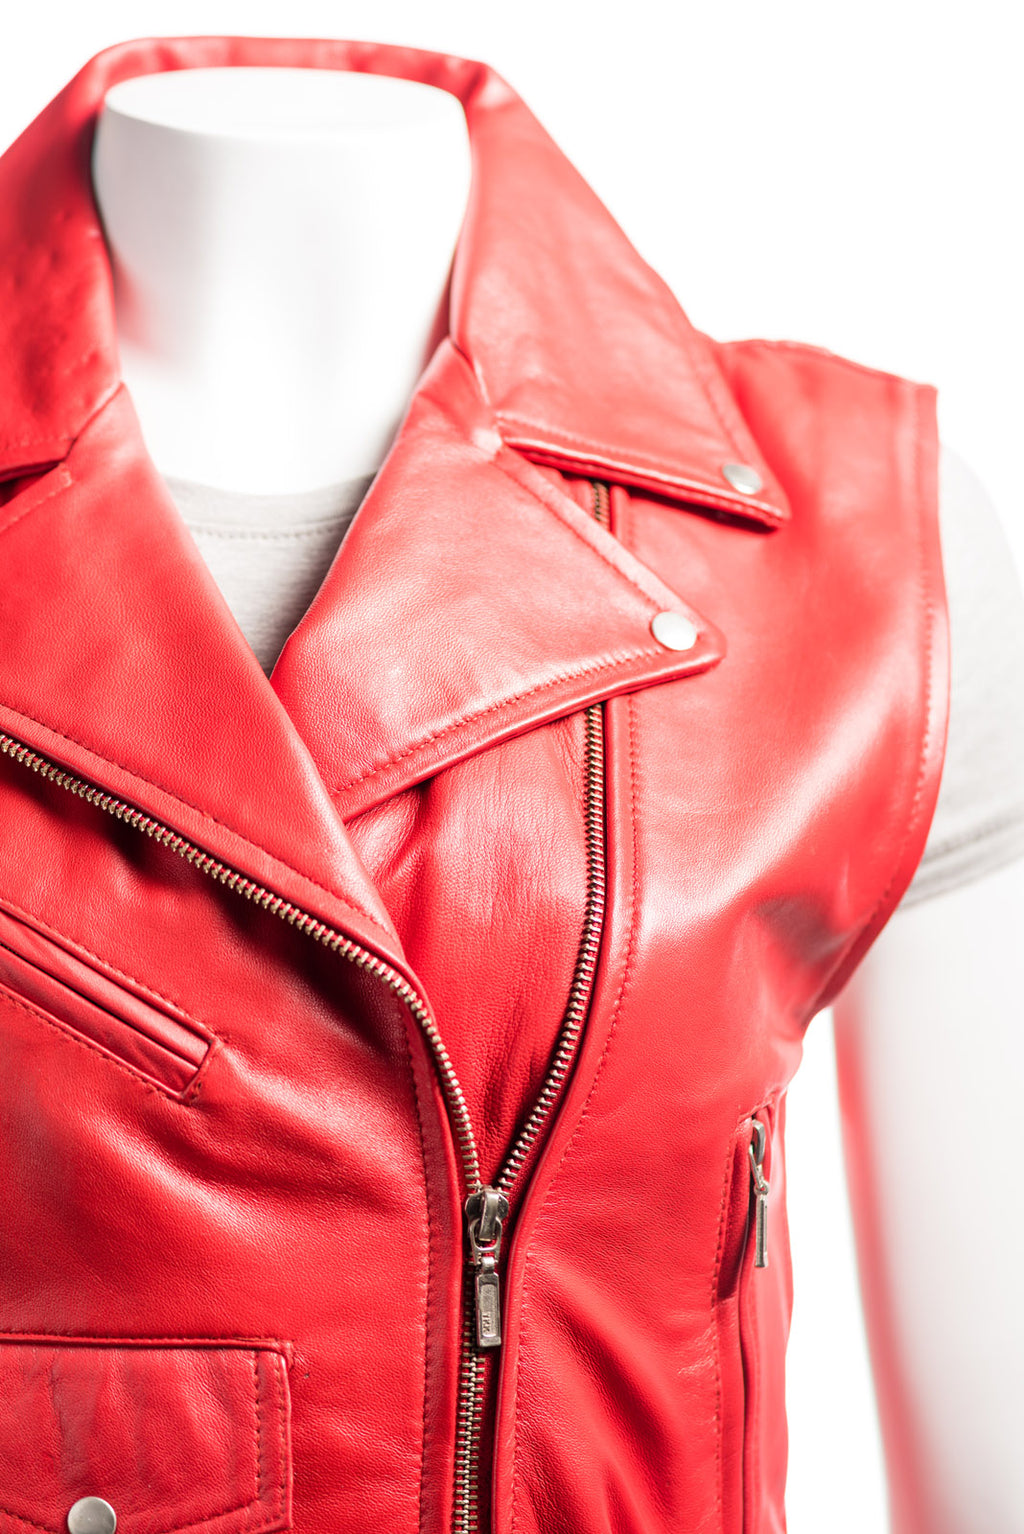 Ladies Red Brando Style Leather Waistcoat: Isabella